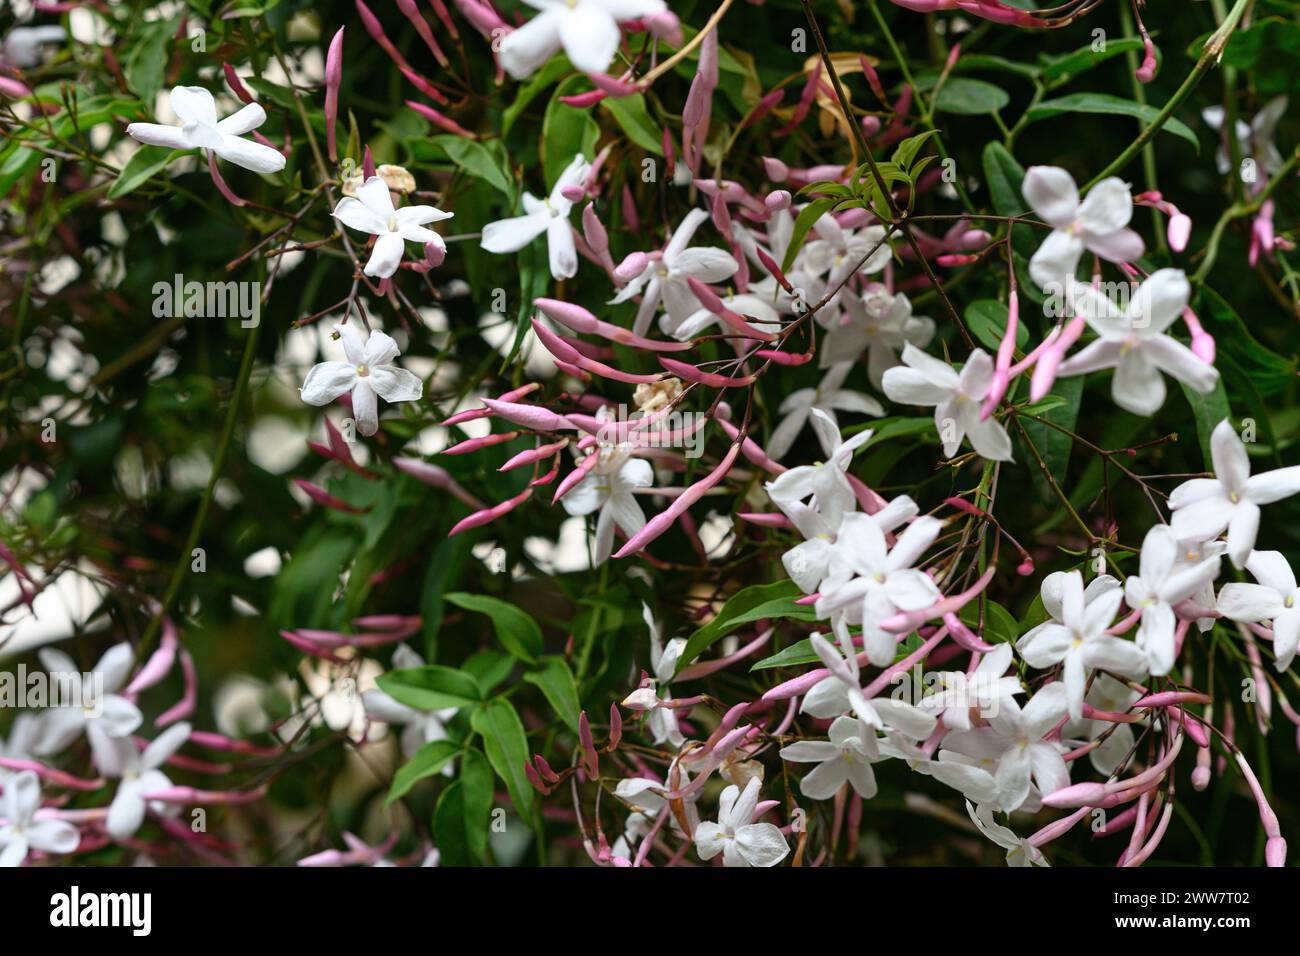 Jasminum polyanthum common names include: the many-flowered jasmine, star jasmine, pink jasmine, or white jasmine, is a species of flowering plant in Stock Photo